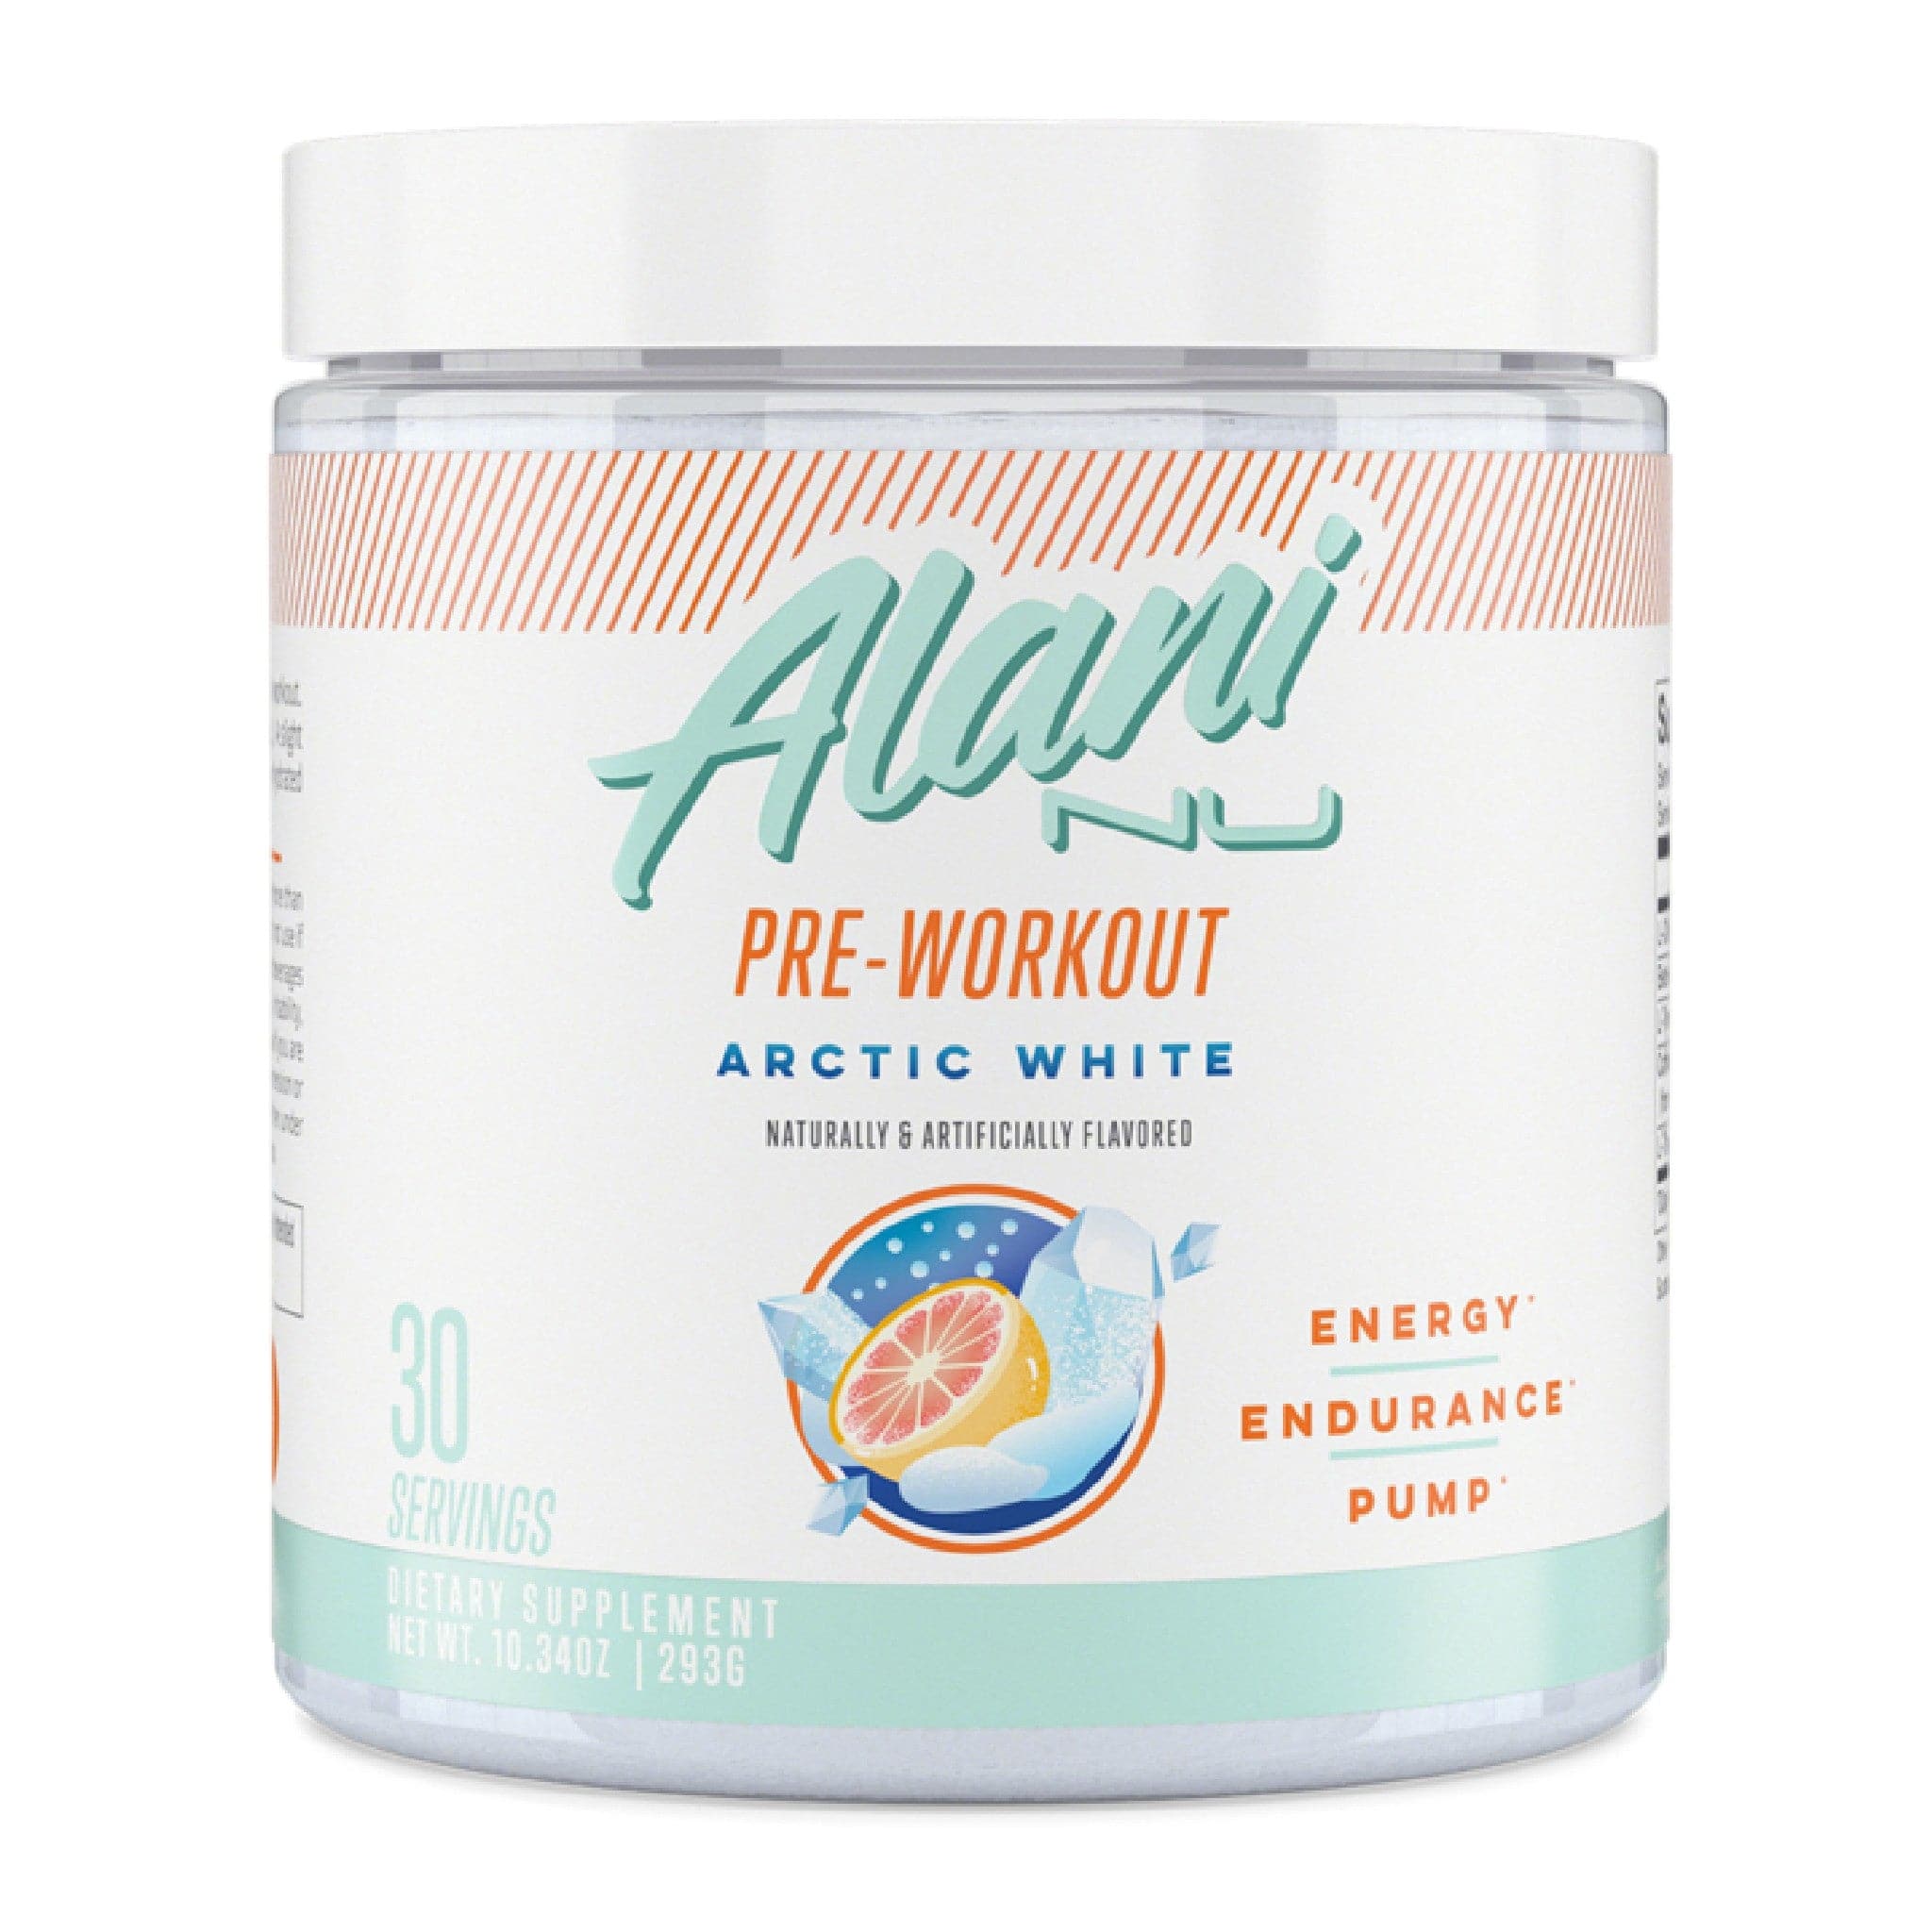 Alani Nu Pre-Workout 30 portions